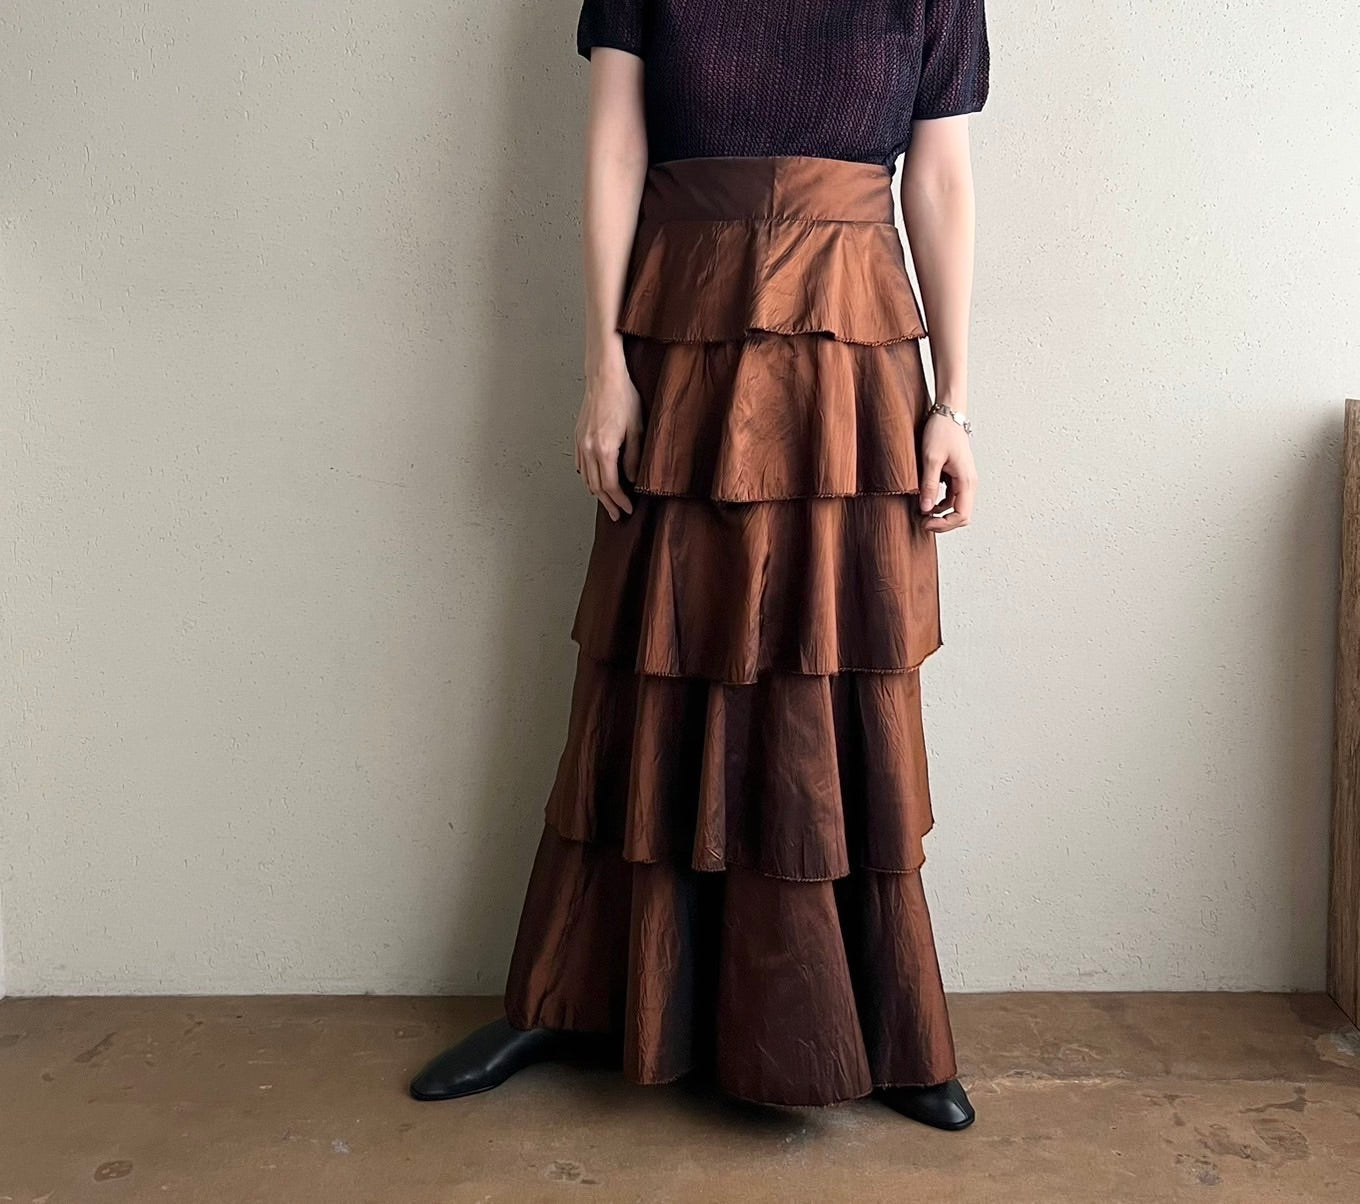 90s Silk Design Skirt Made in USA